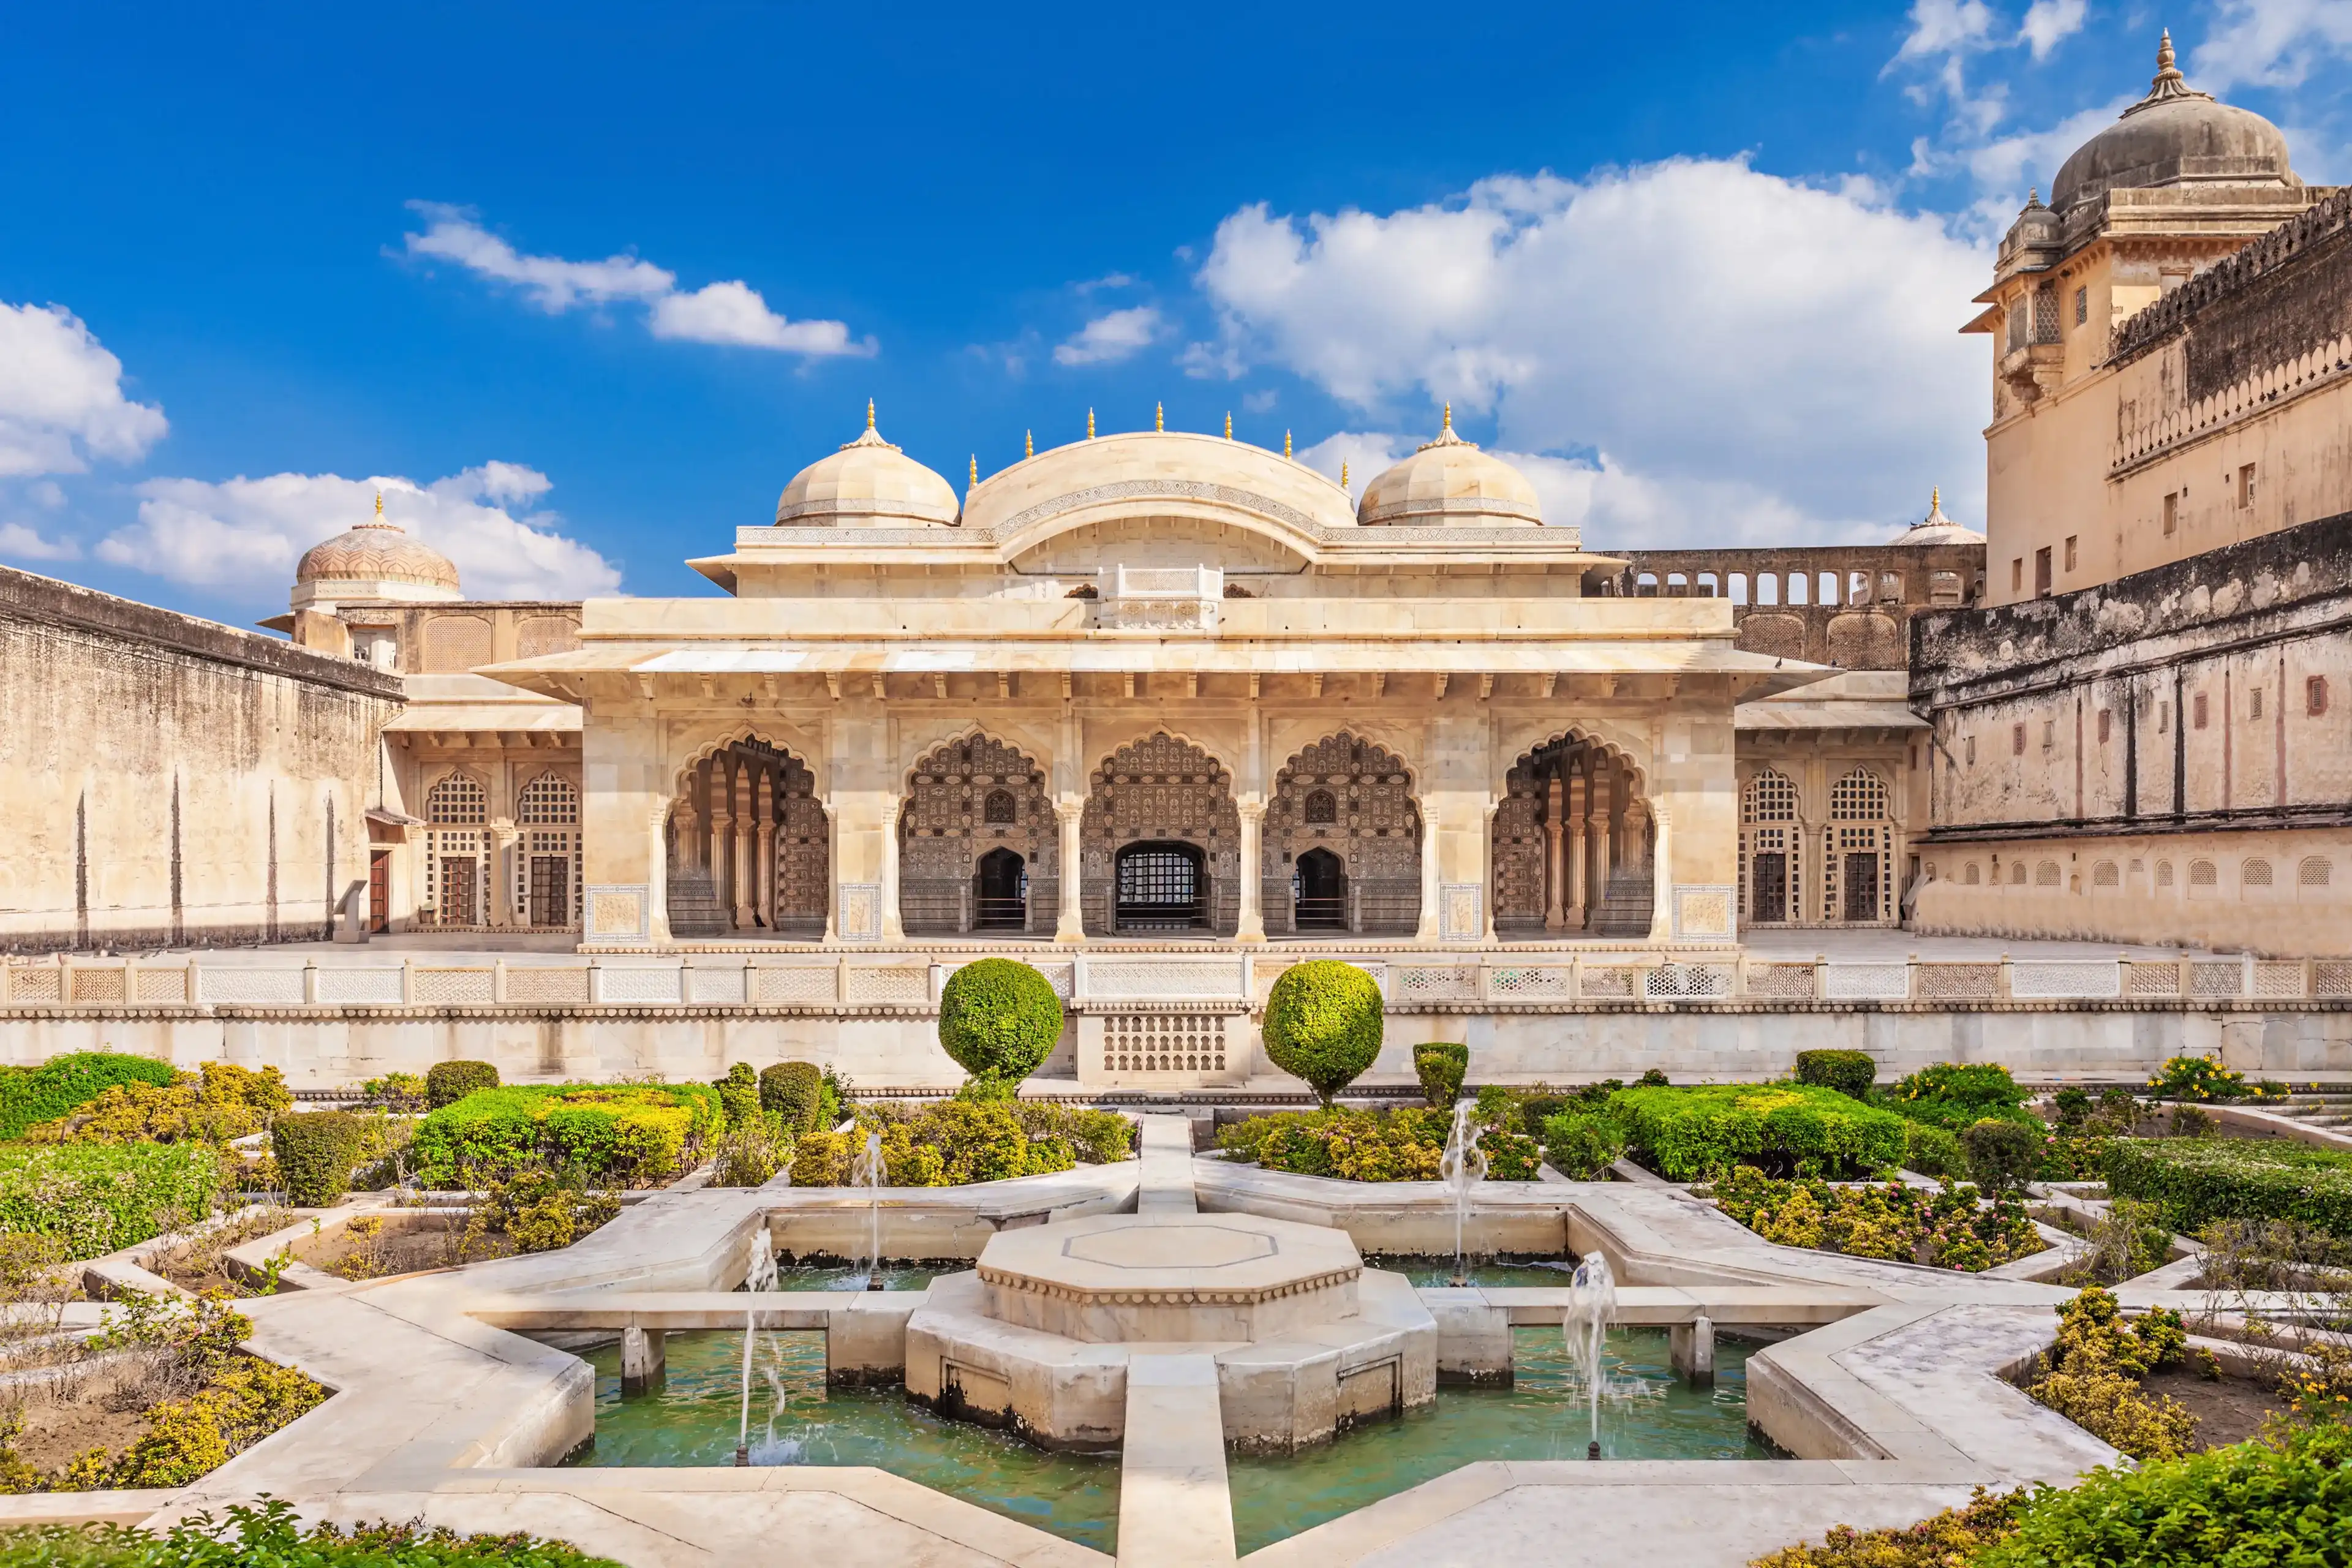  Best Jaipur hotels. Cheap hotels in Jaipur, India